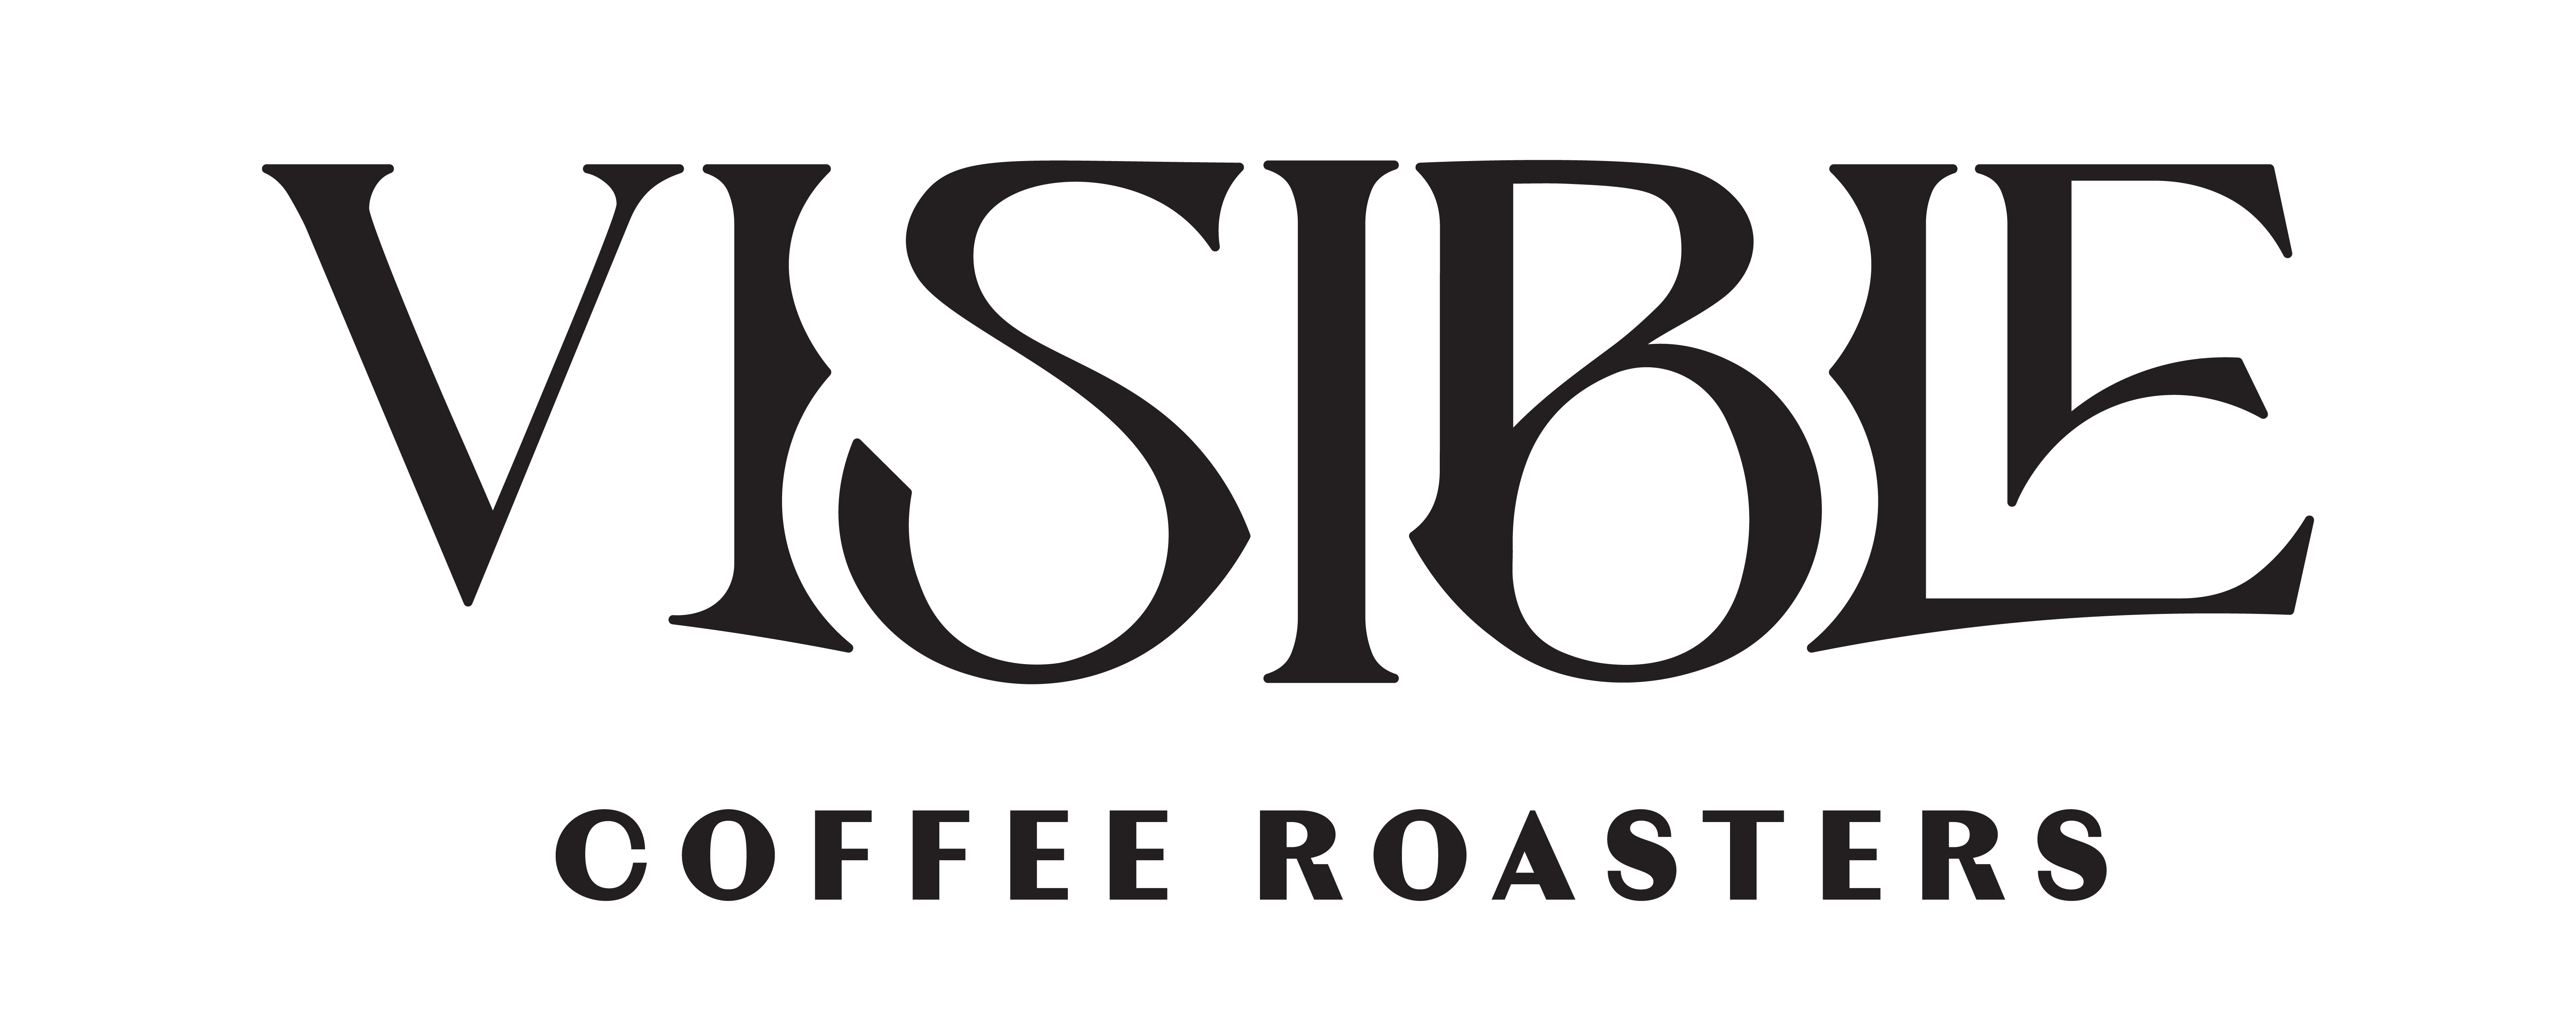 Visible Coffee Company